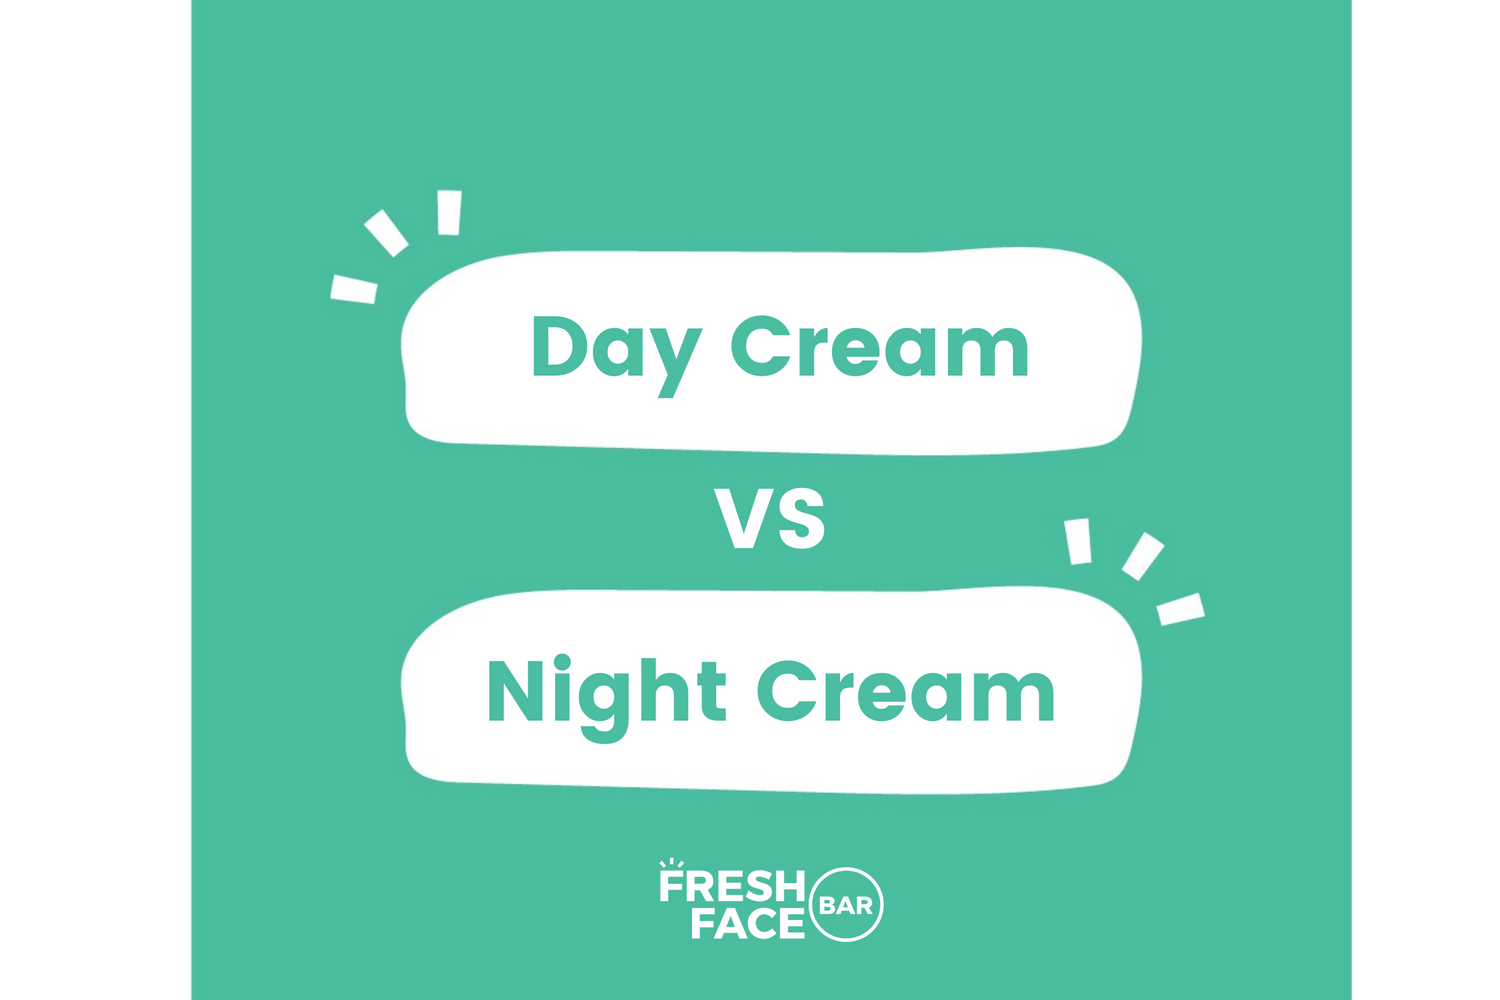 Day Cream VS Night Cream